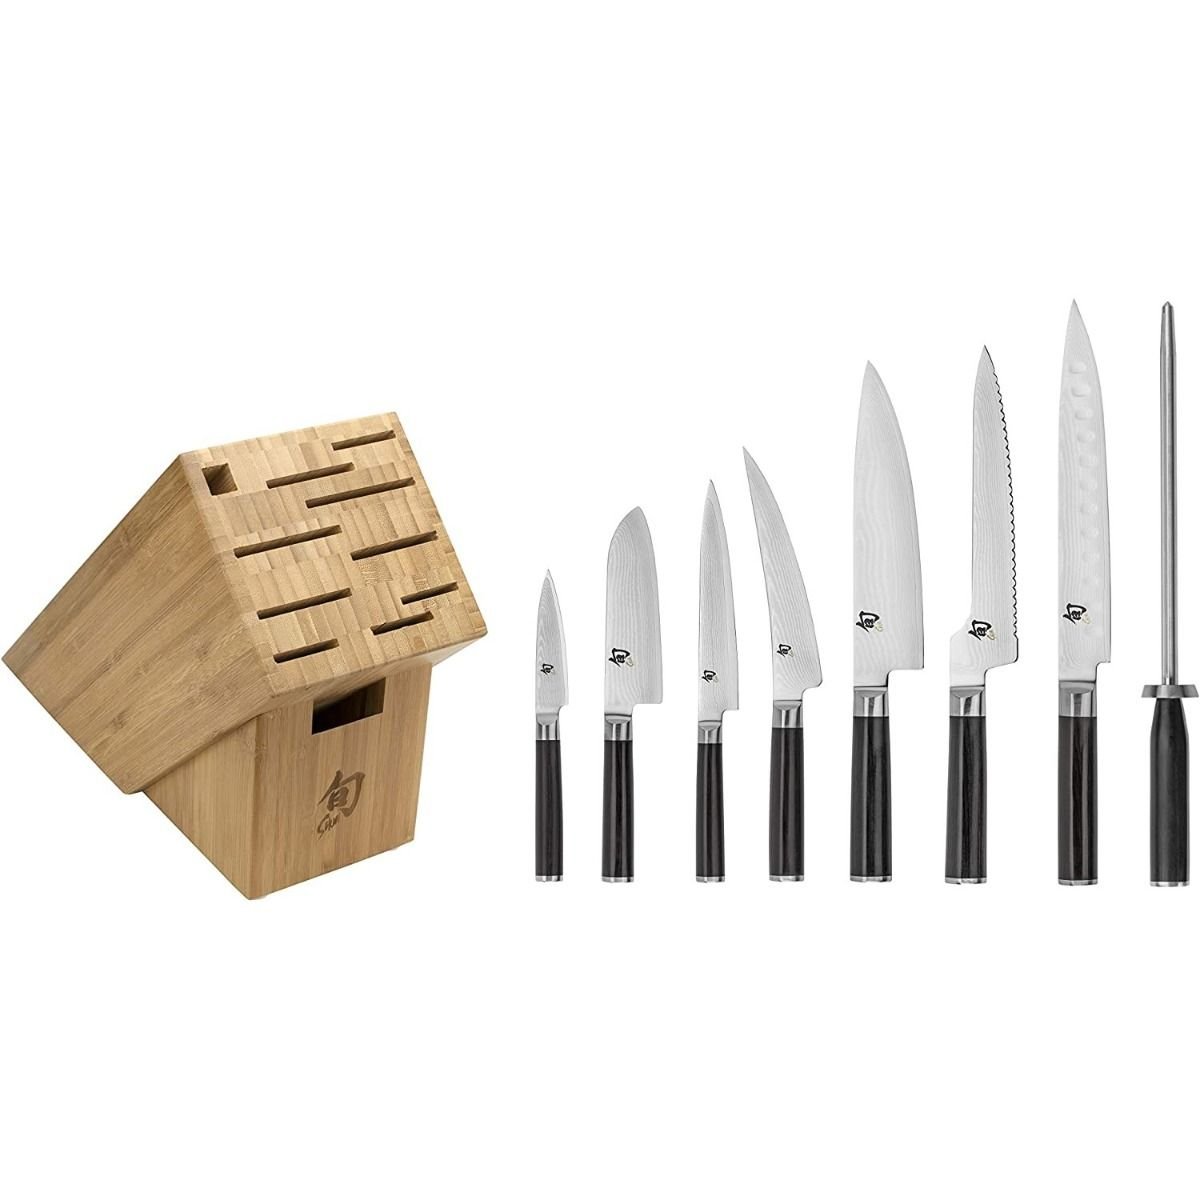 Cuisinart 10 Pc. Pakka Wood Professional Series Cutlery Block Set, Cutlery, Household